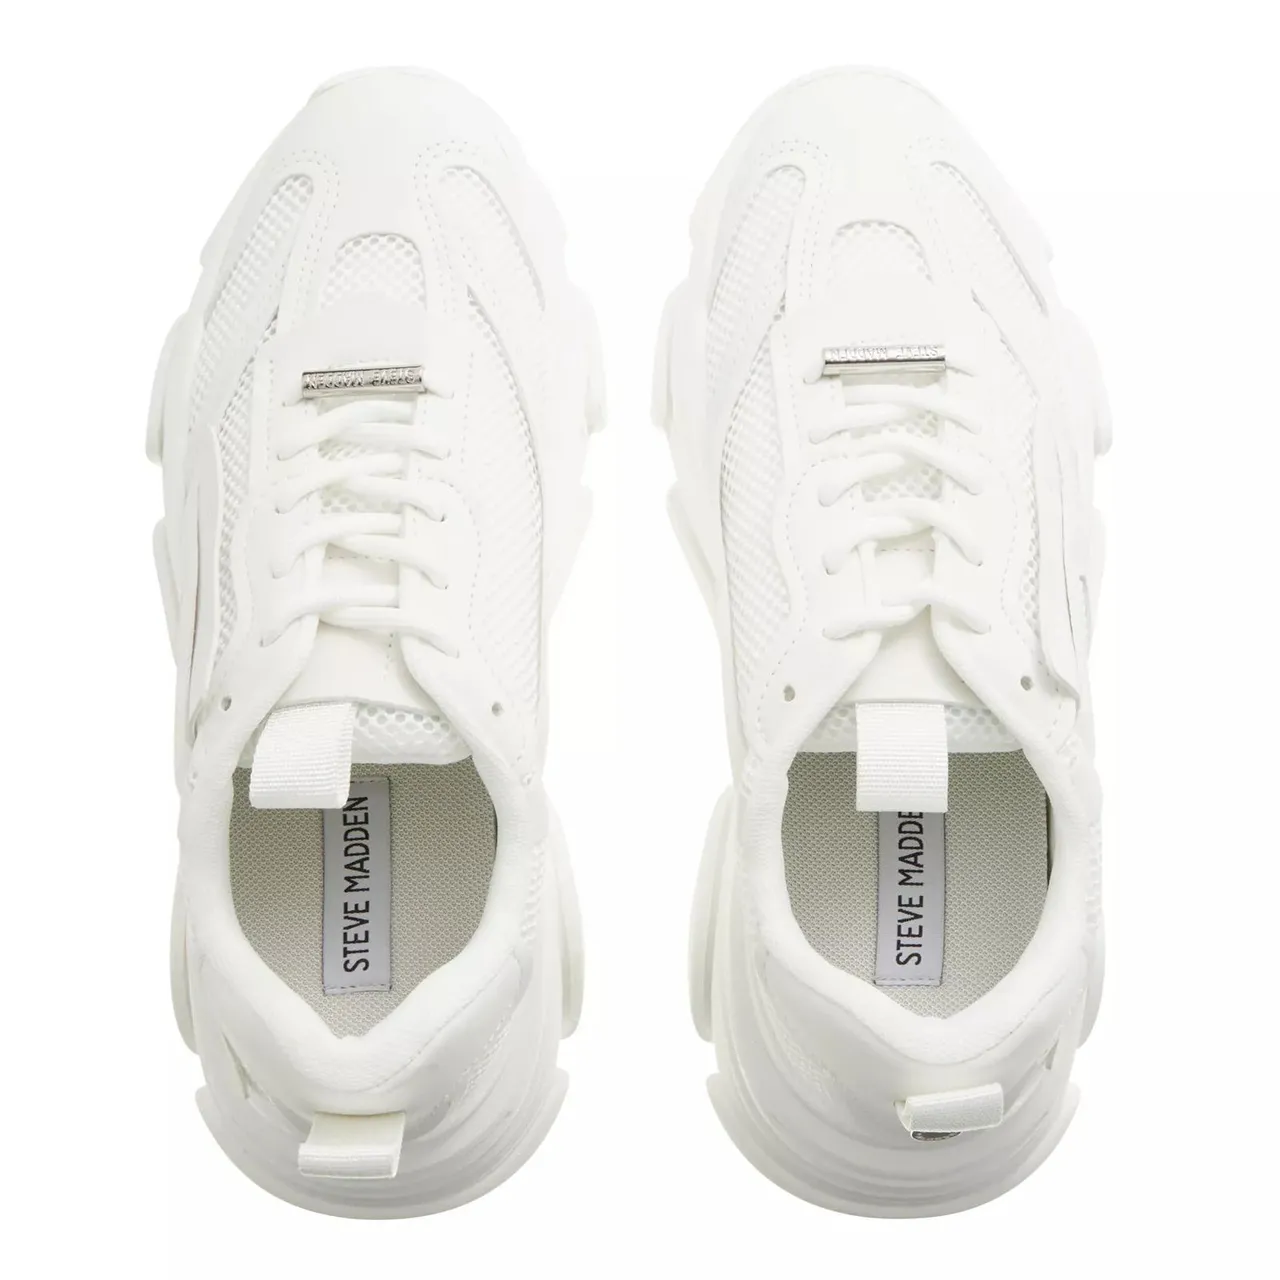 Steve Madden Sneakers - Possession-E - white - Sneakers for ladies